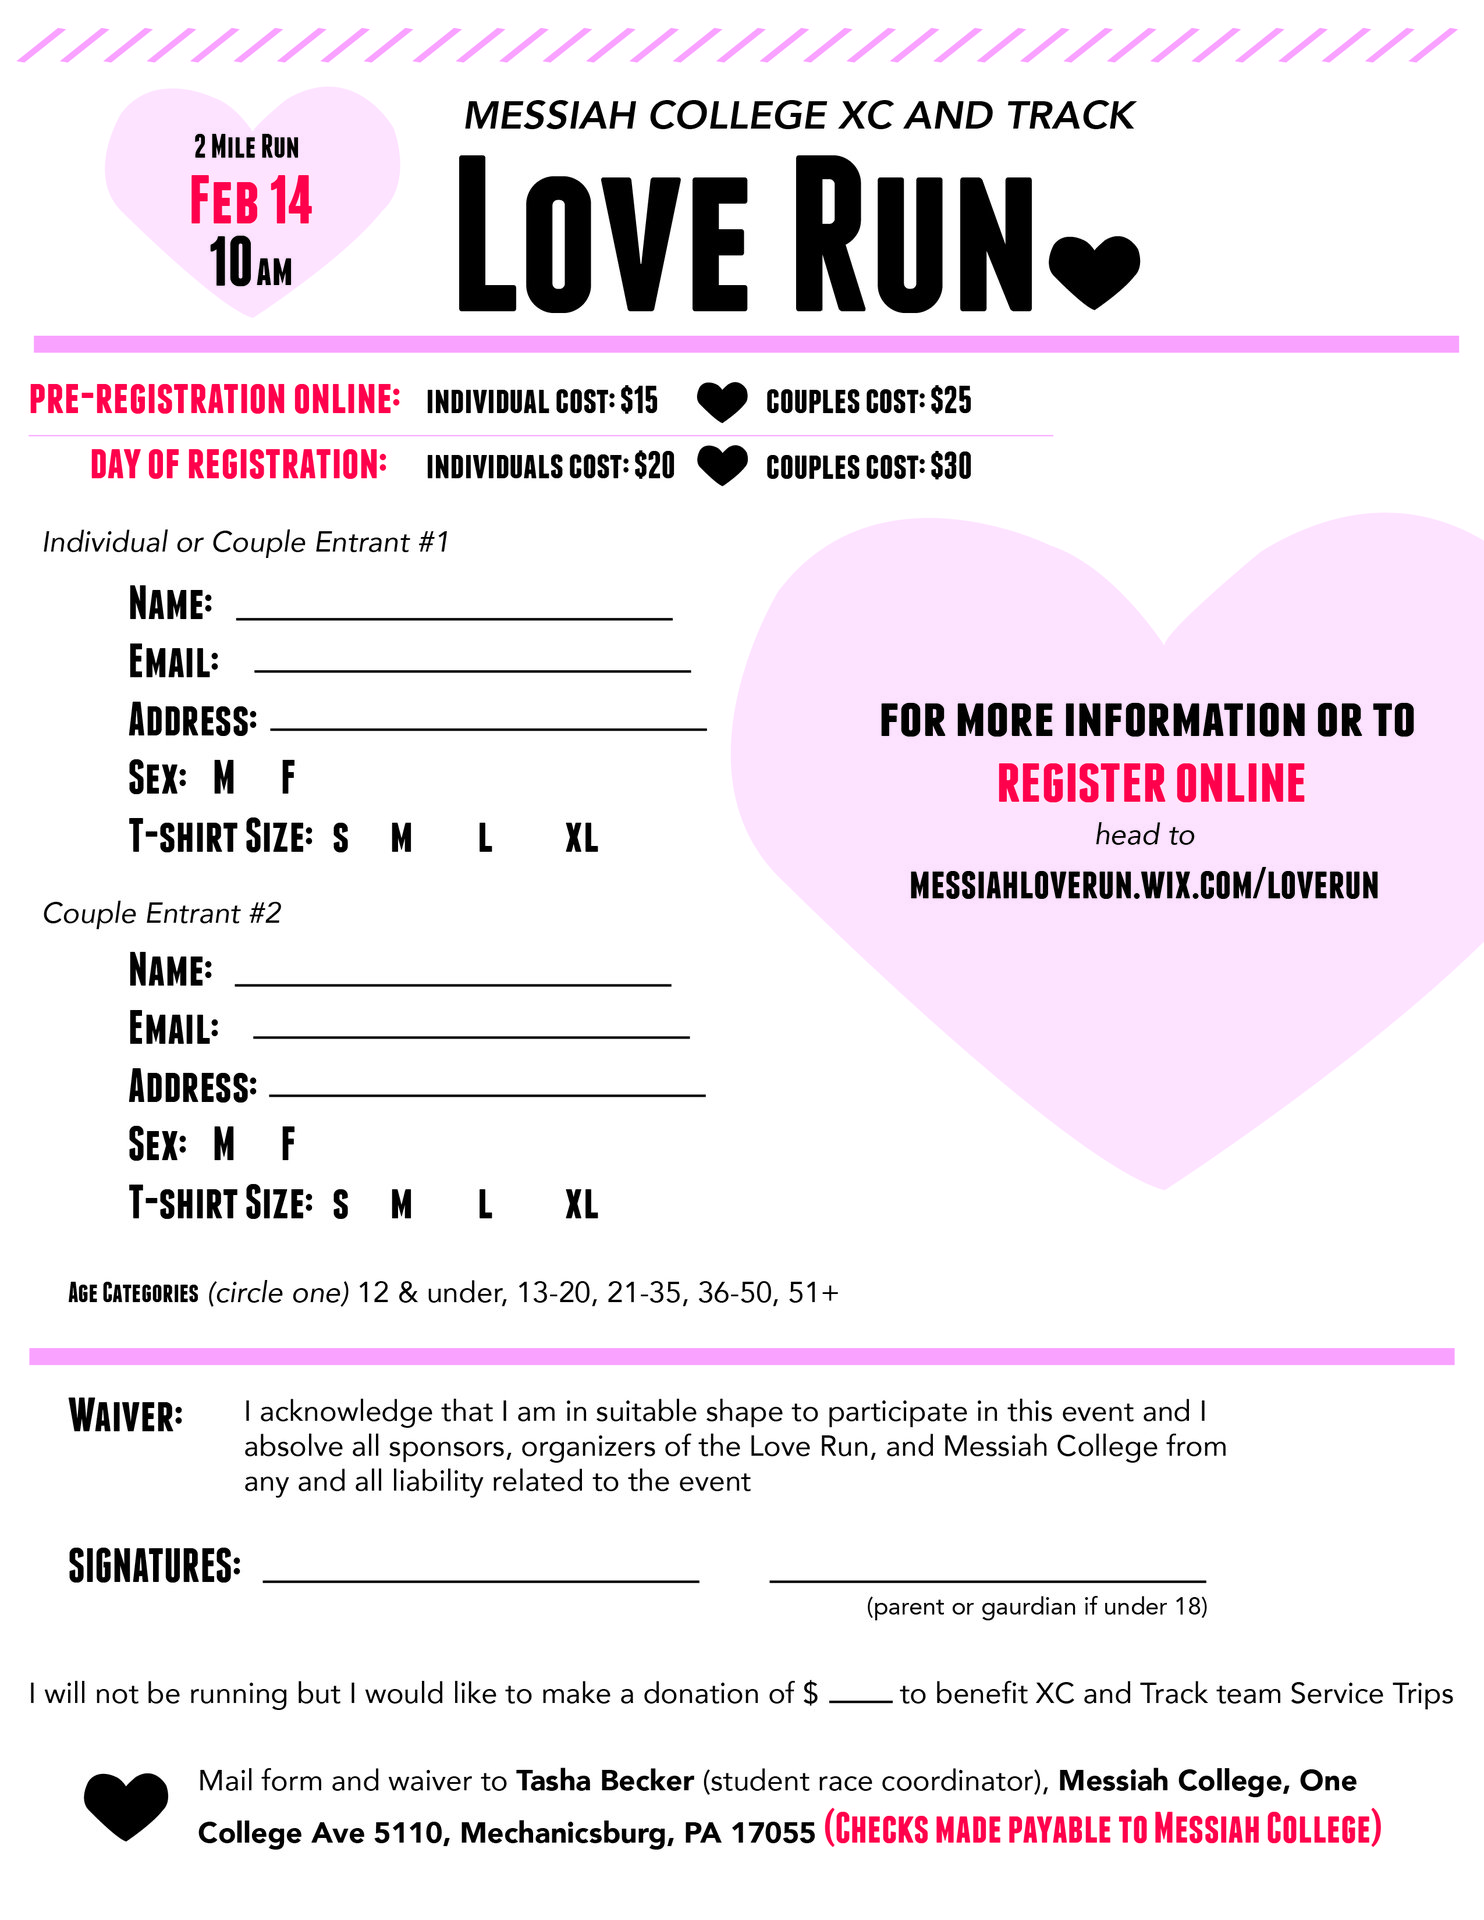 Abigail Wylie - Love Run Registration Form